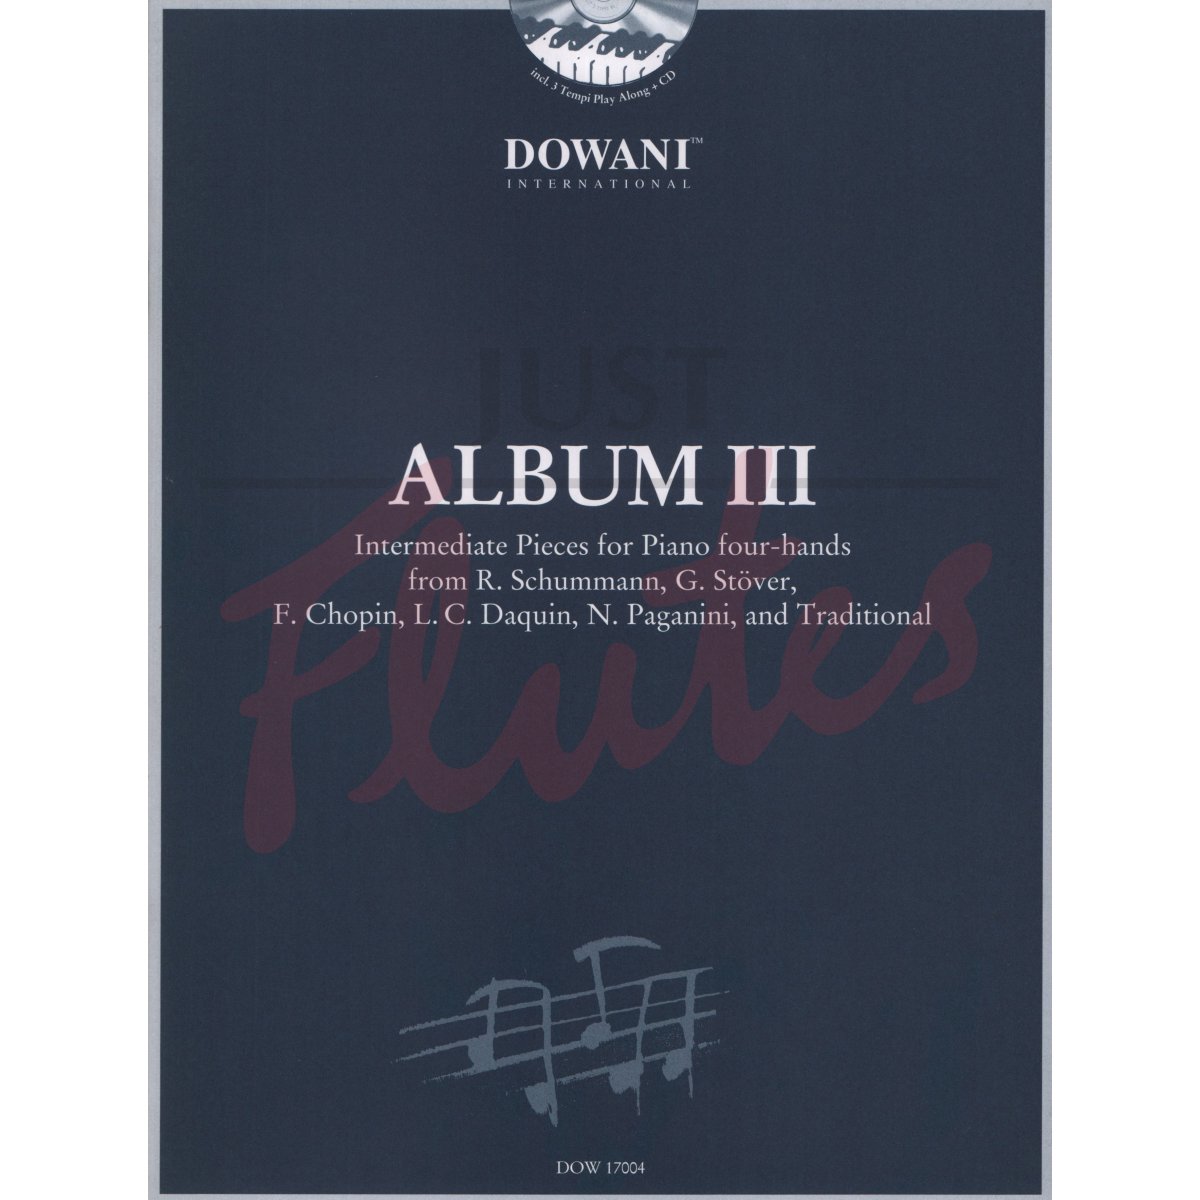 Album III for Piano